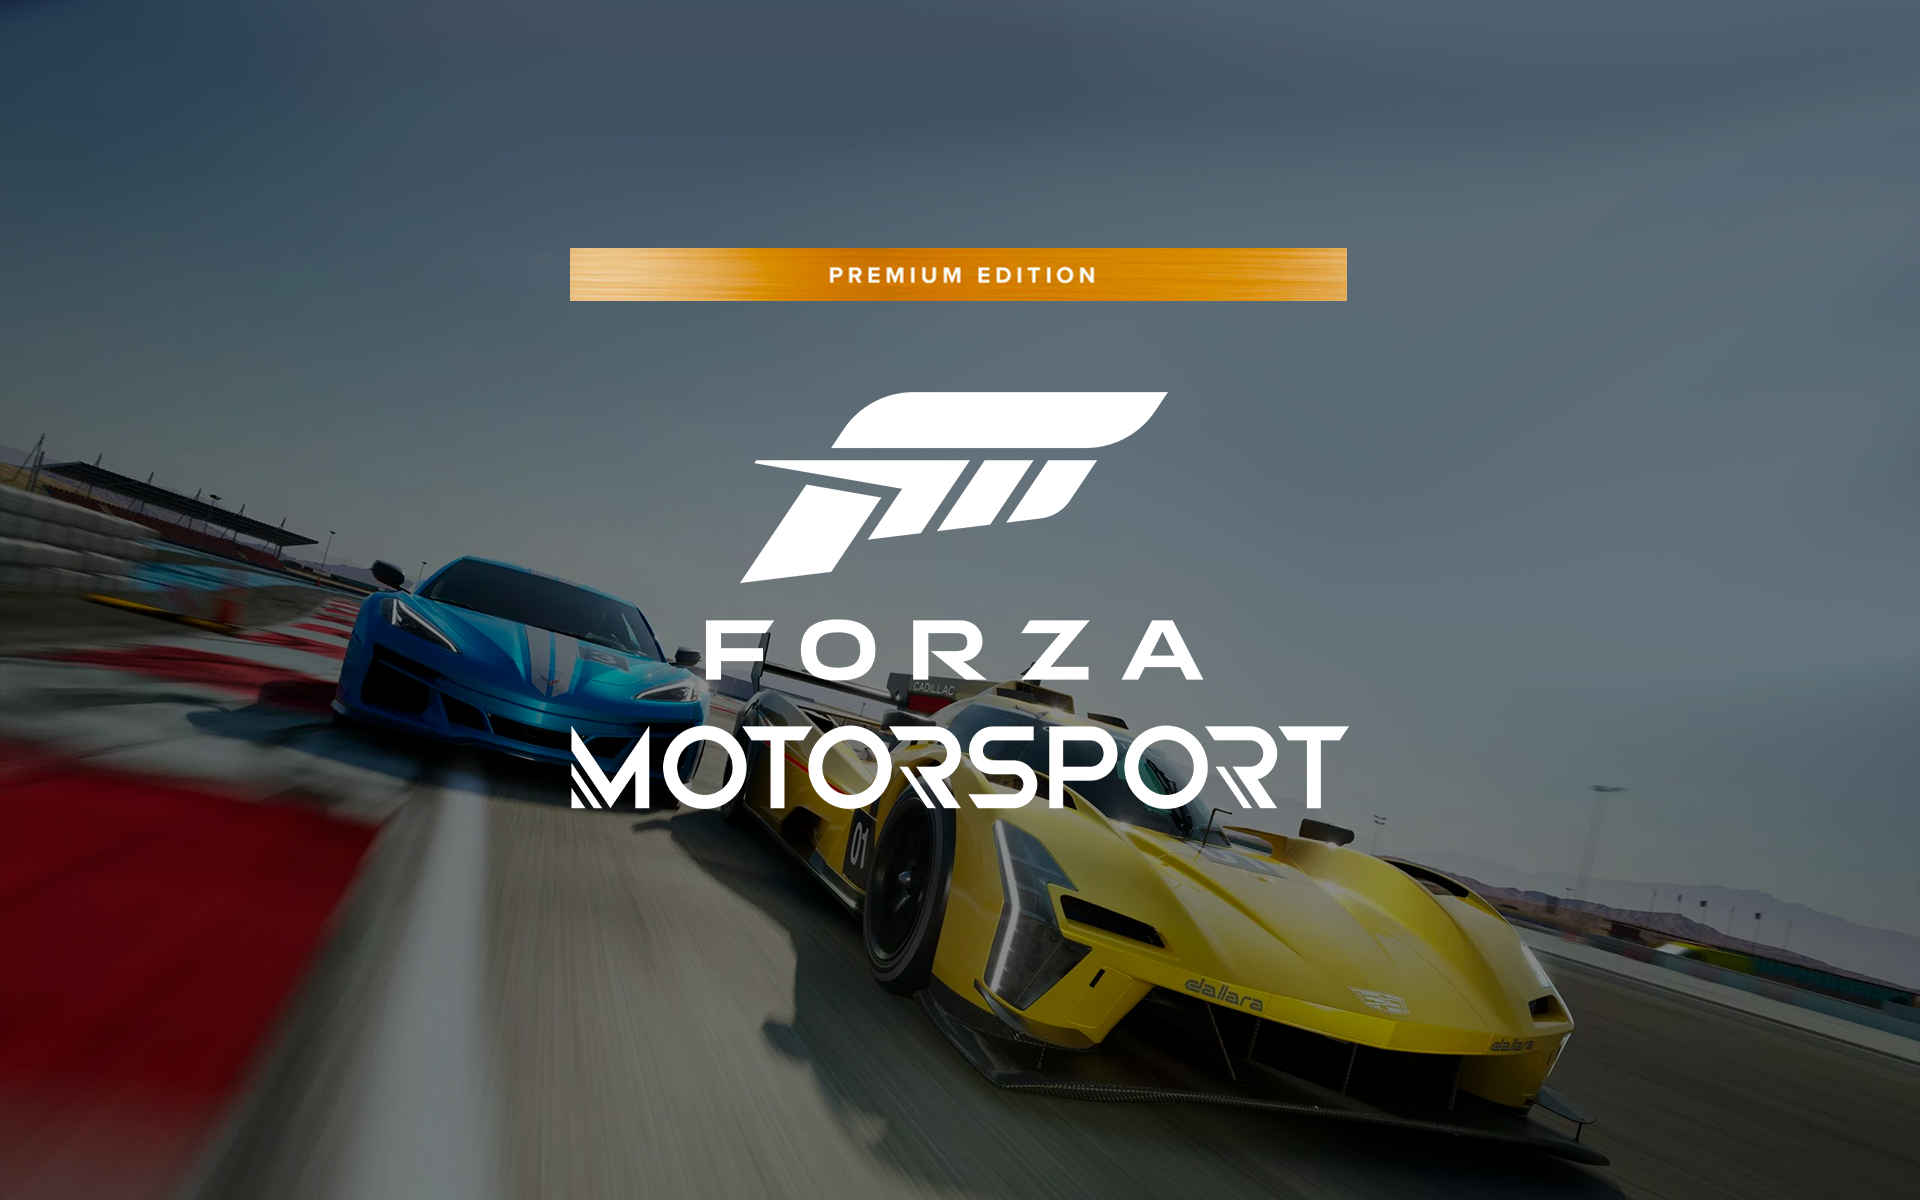 Forza Motorsport: Premium Edition - Xbox Series X/S and Windows